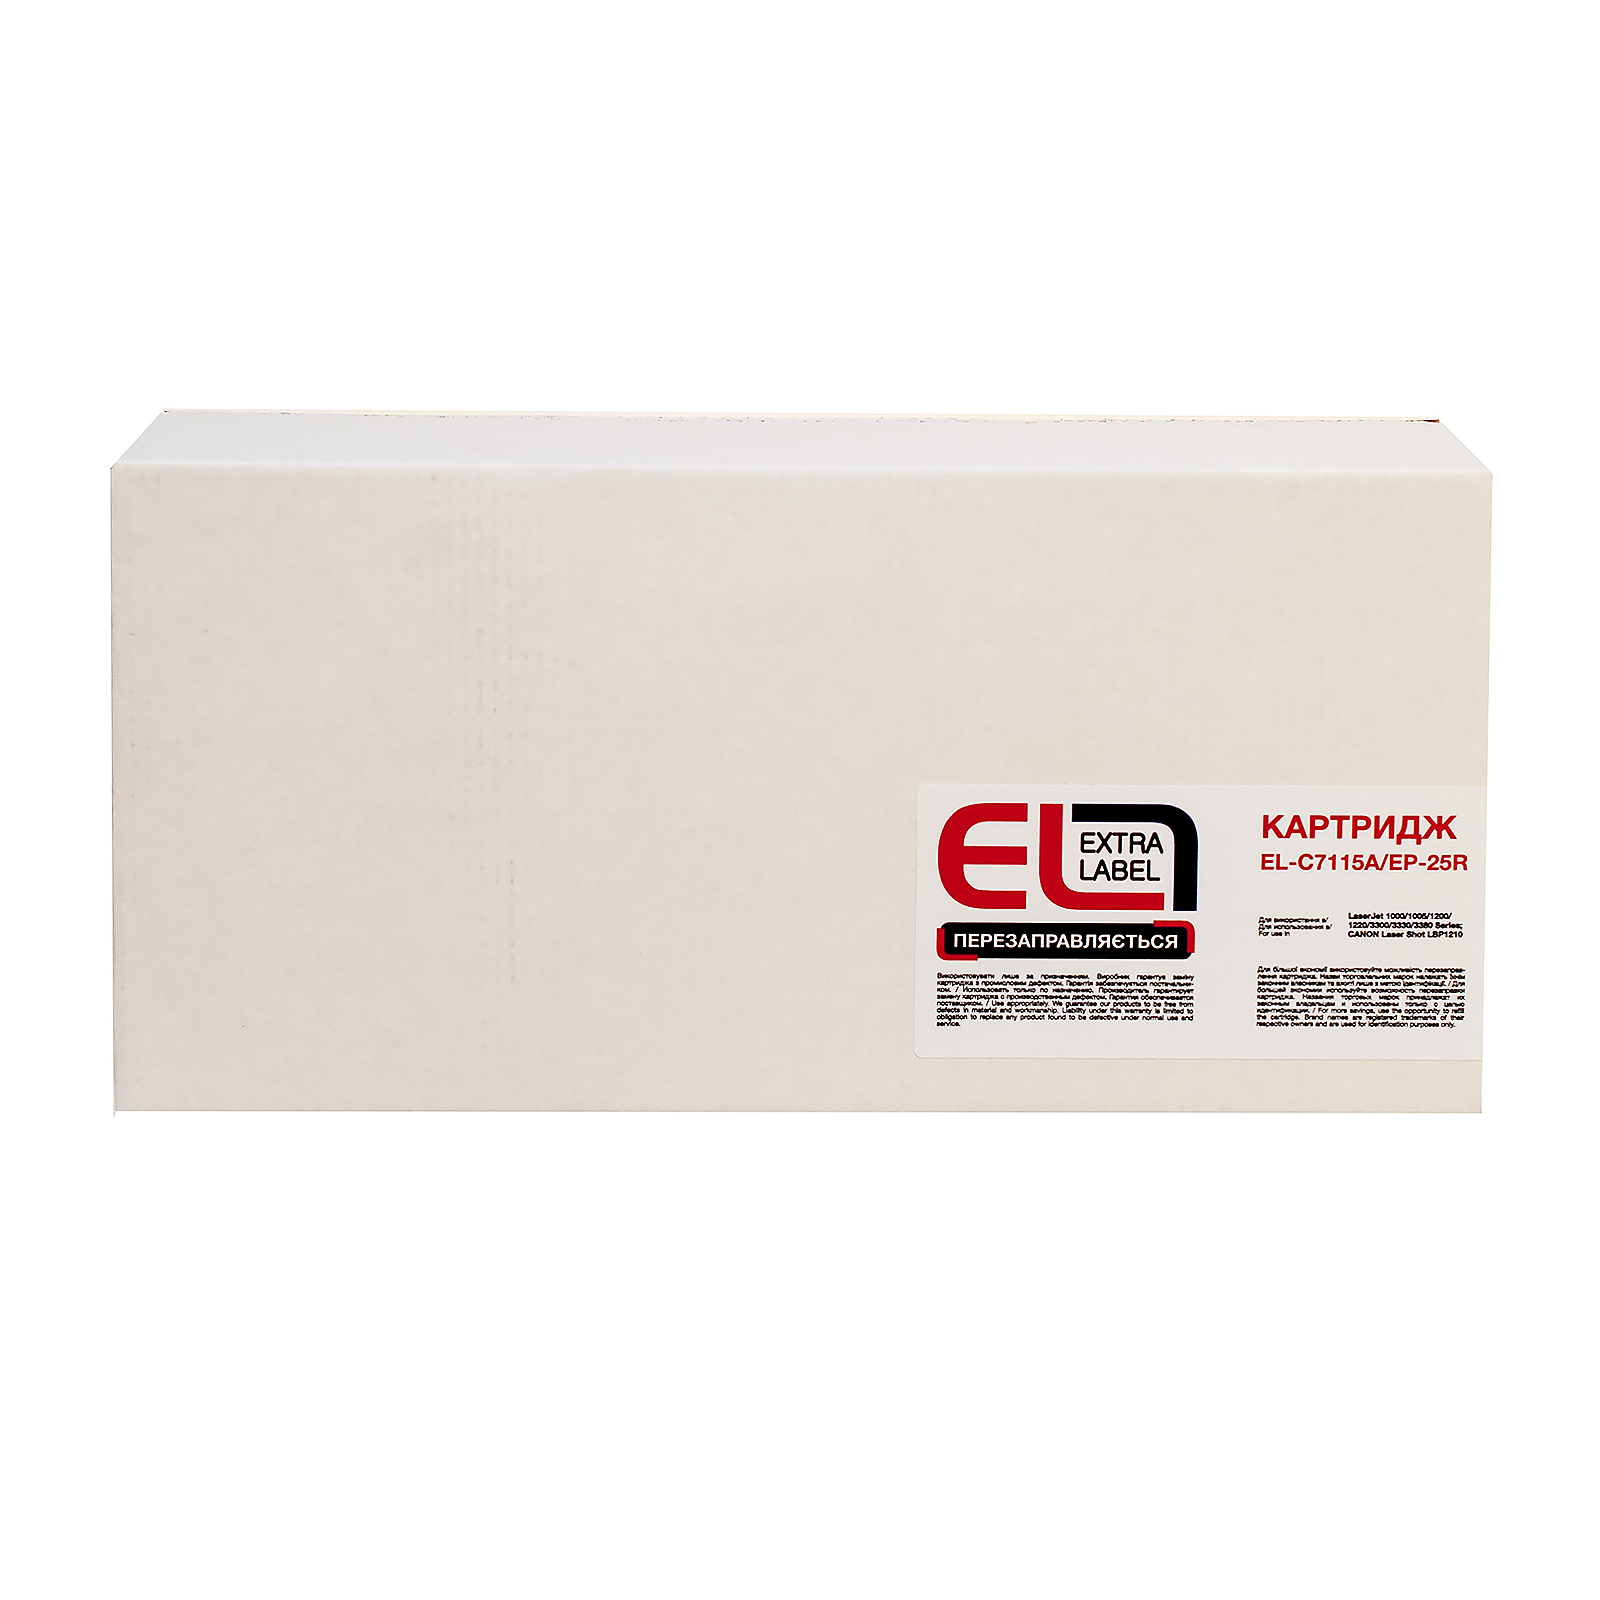 Картридж Extra label HP LJ C7115A/CANON EP-25 (EL-C7115A/EP-25R)